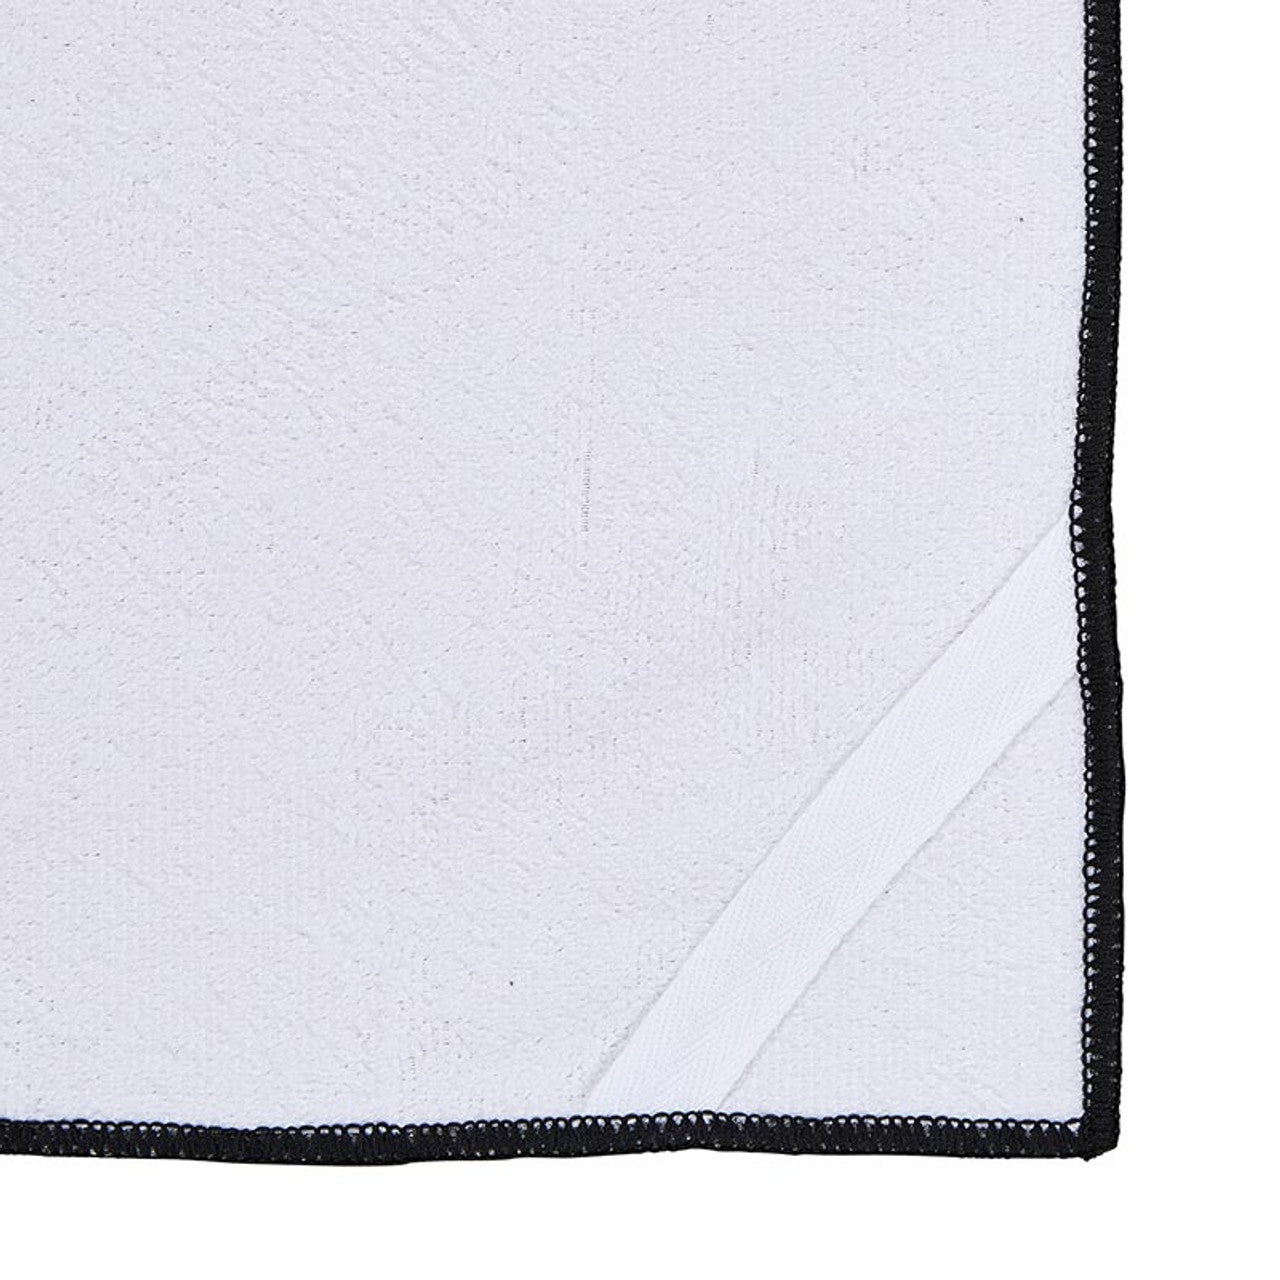 Bone Dry Microfiber Pet Towel | 56" x 28"